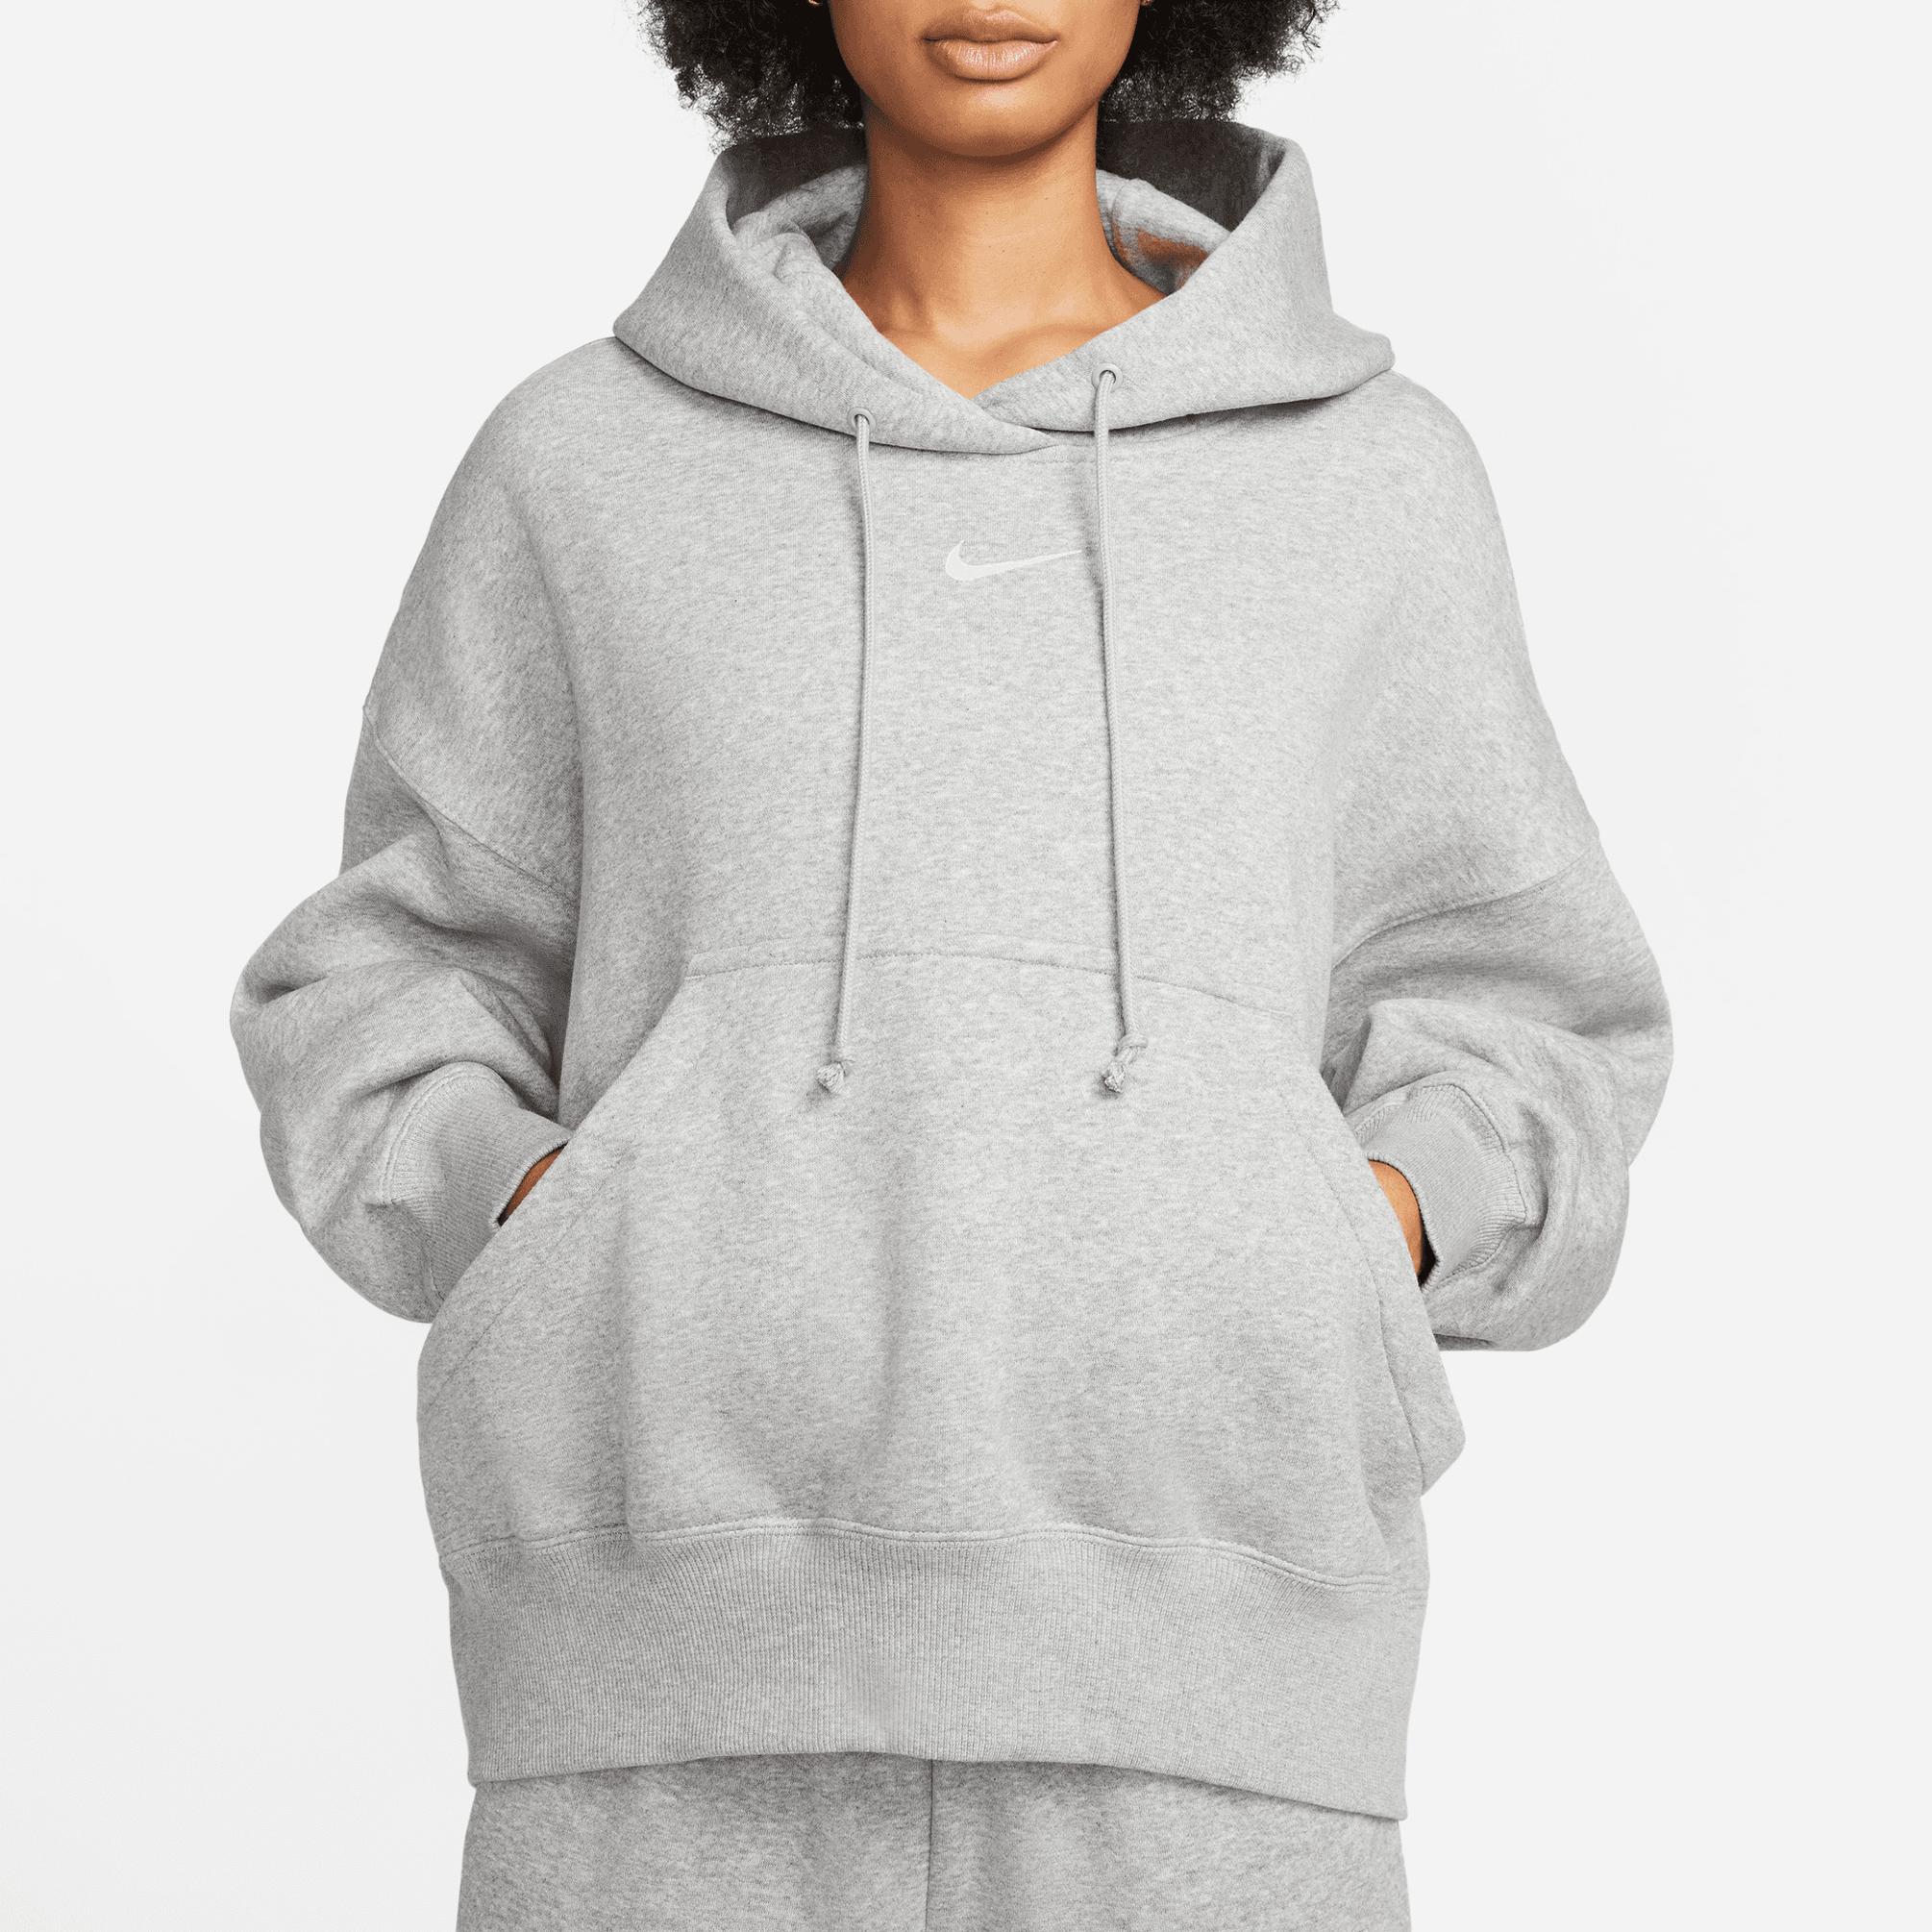  Nike Sportswear Phoenix Fleece Oversize Kadın Gri Hoodie